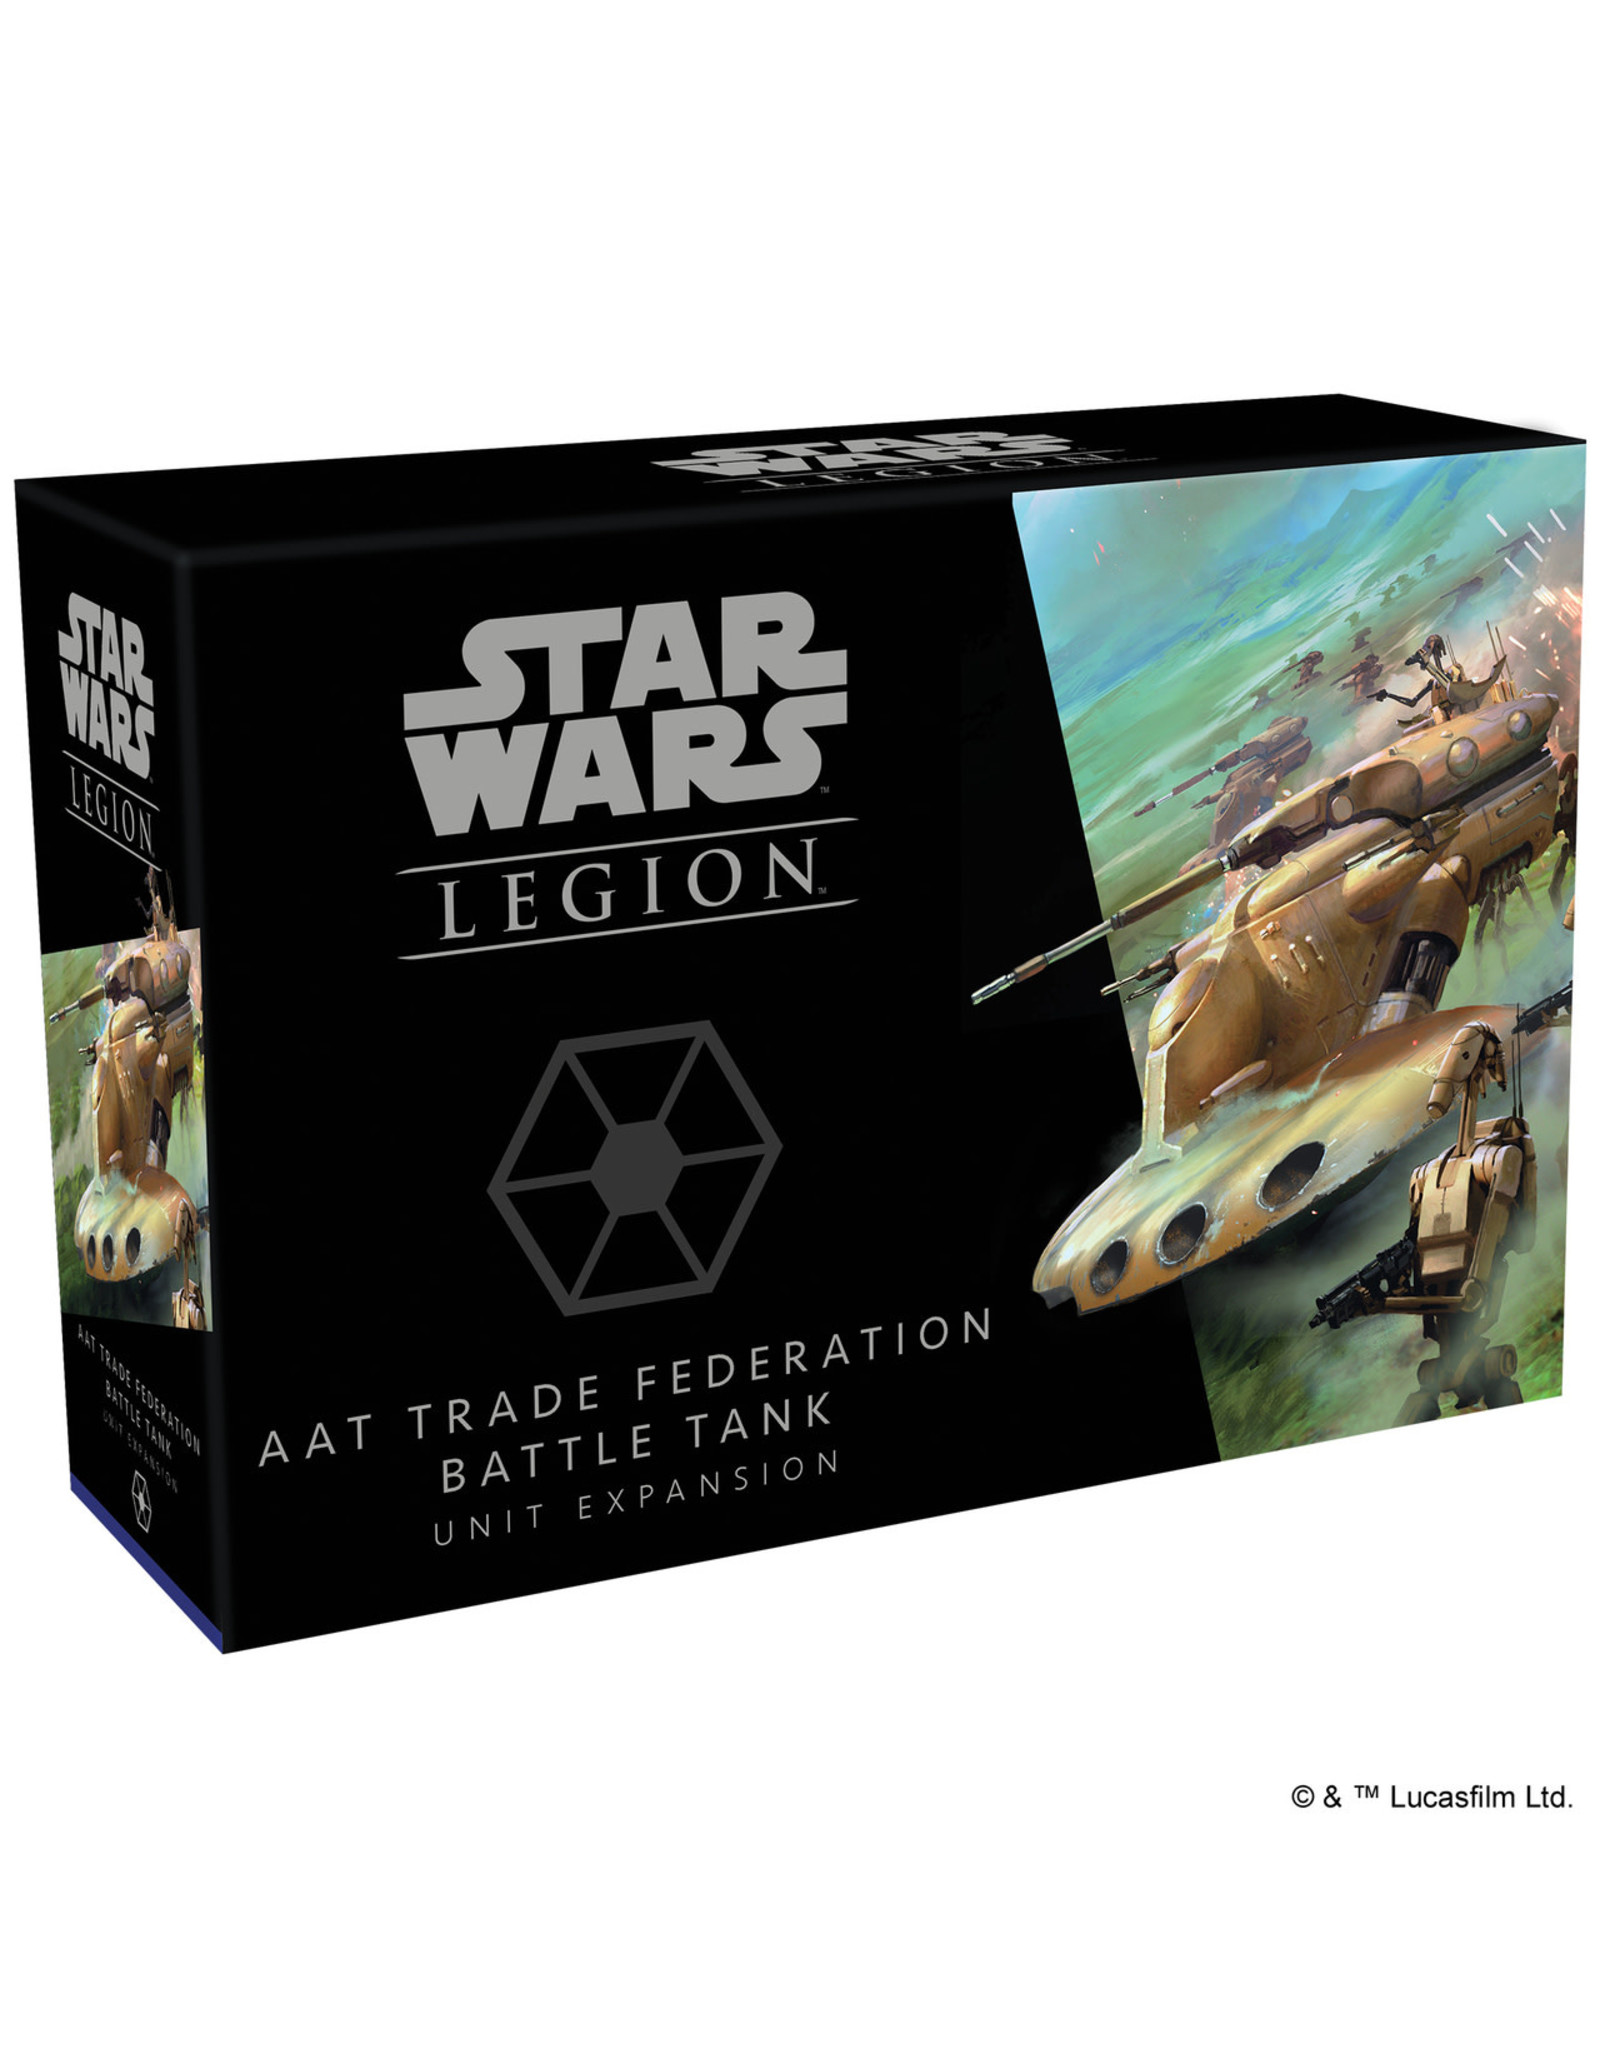 star wars legion aat trade federation battle tank